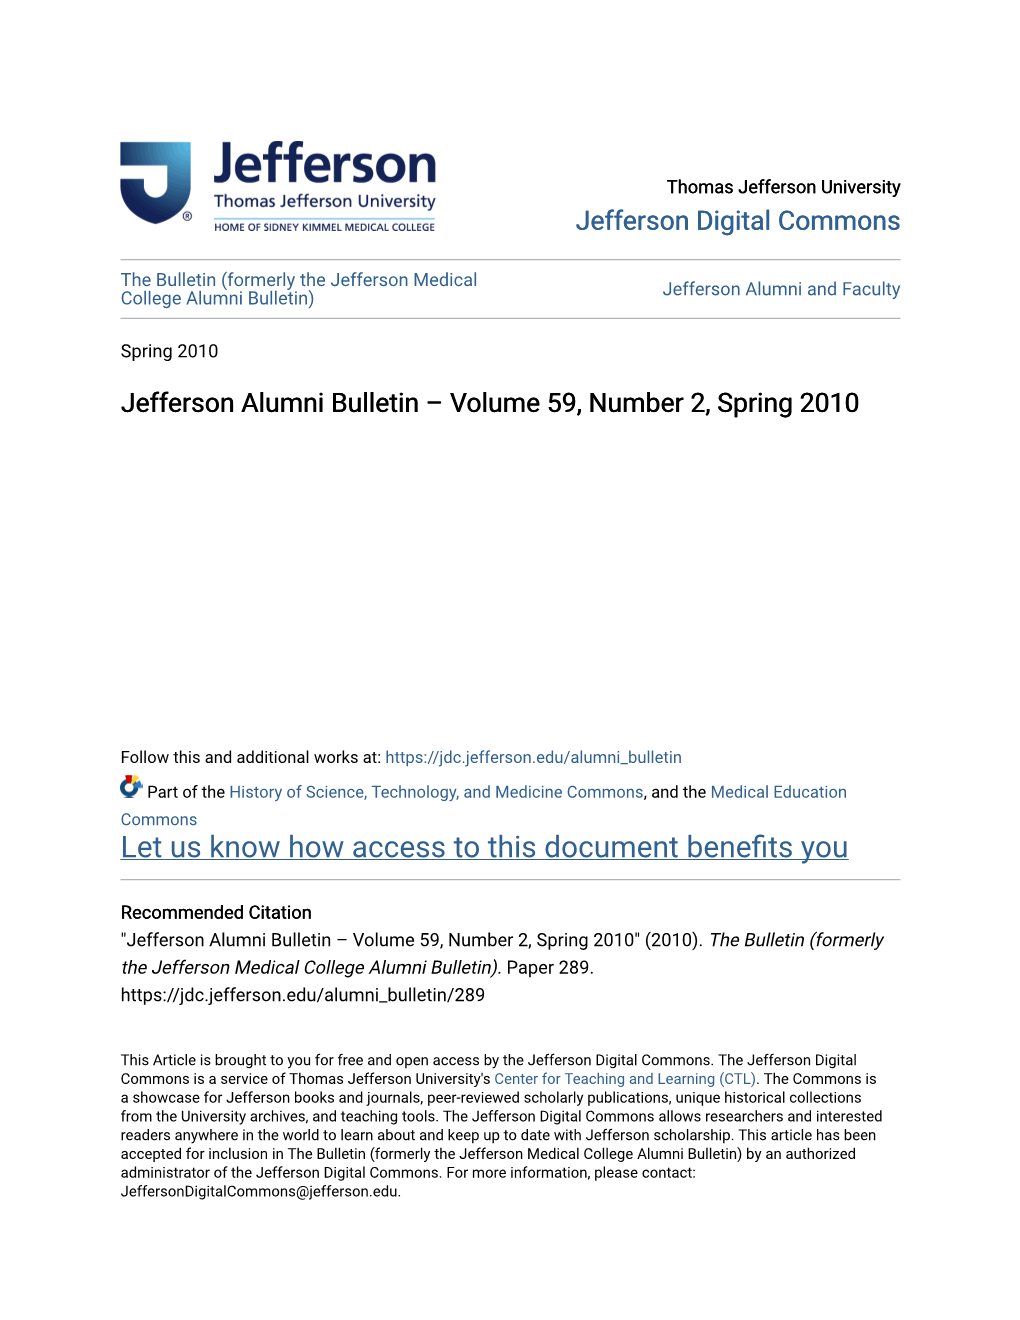 Jefferson Alumni Bulletin – Volume 59, Number 2, Spring 2010